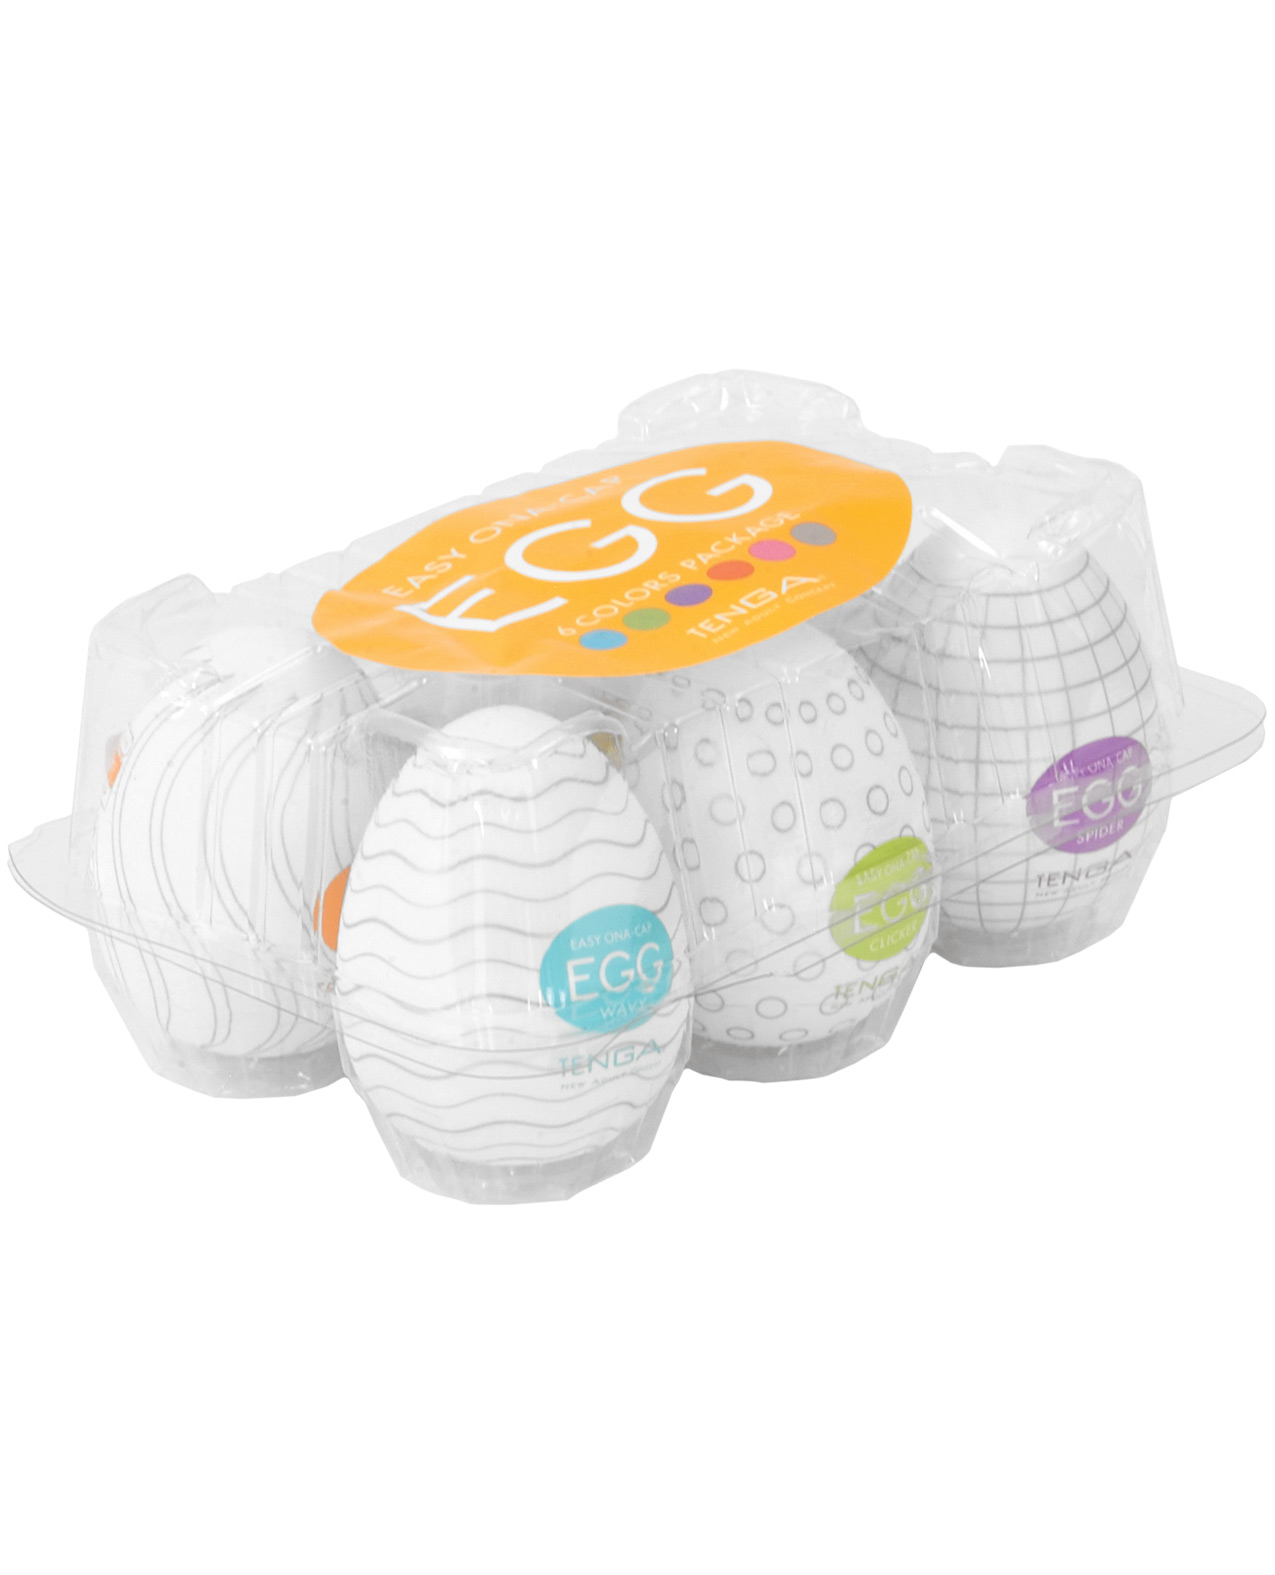 Tenga Egg Variety Display set of 6